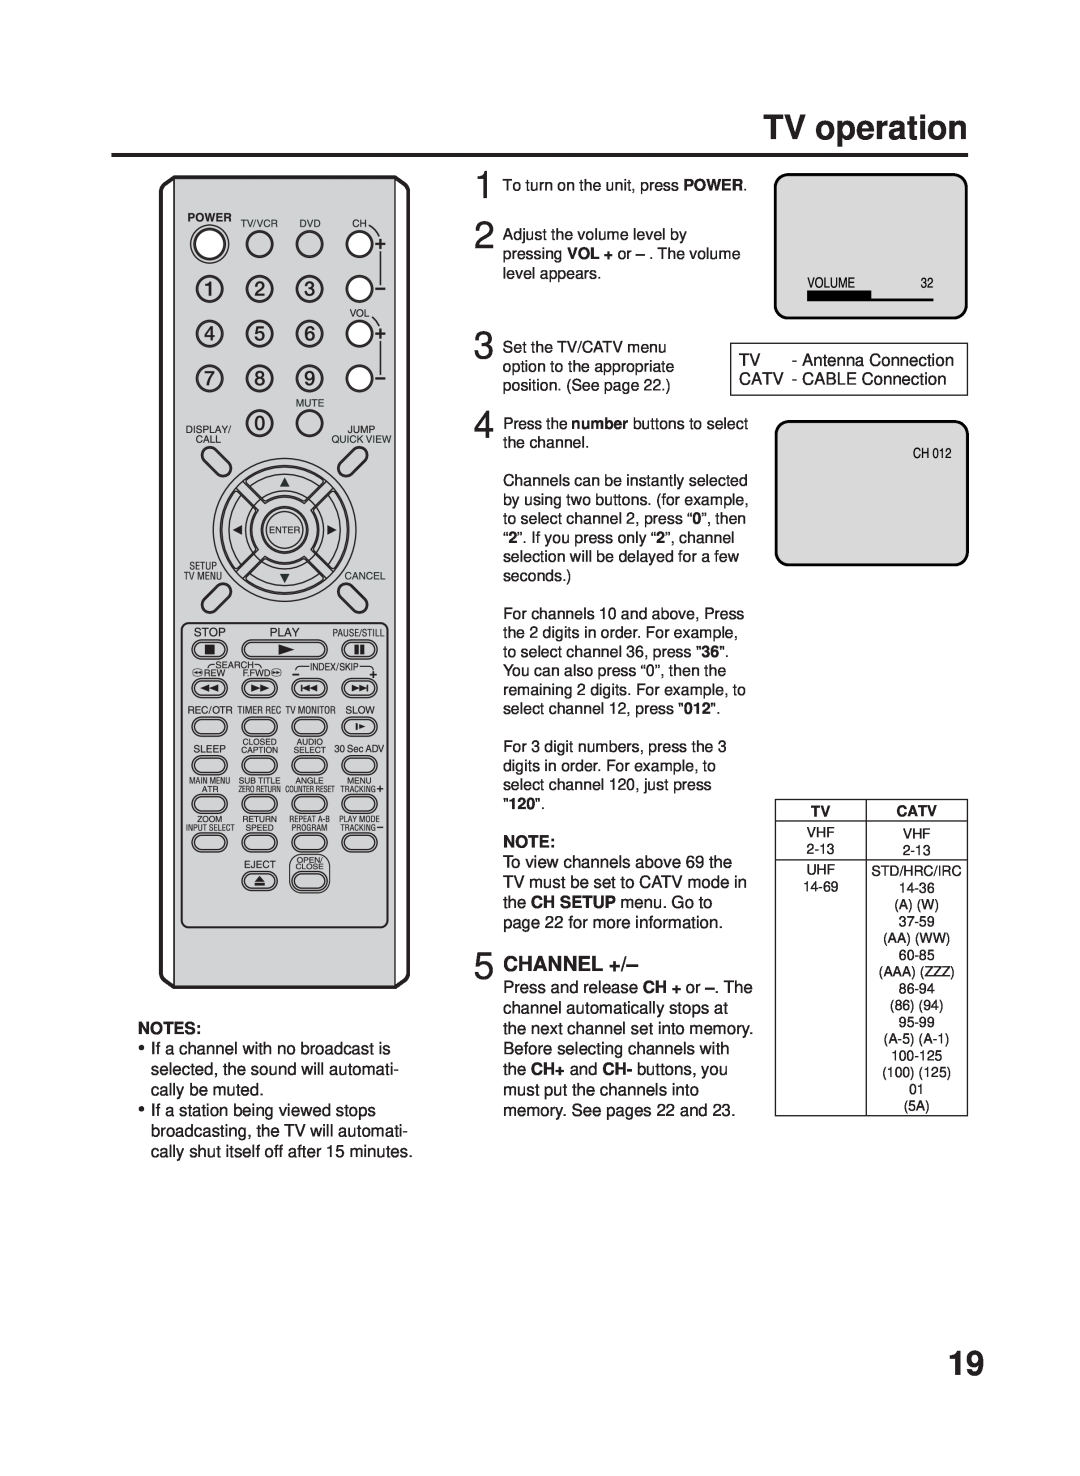 RCA 27F500TDV manual TV operation, Channel + 